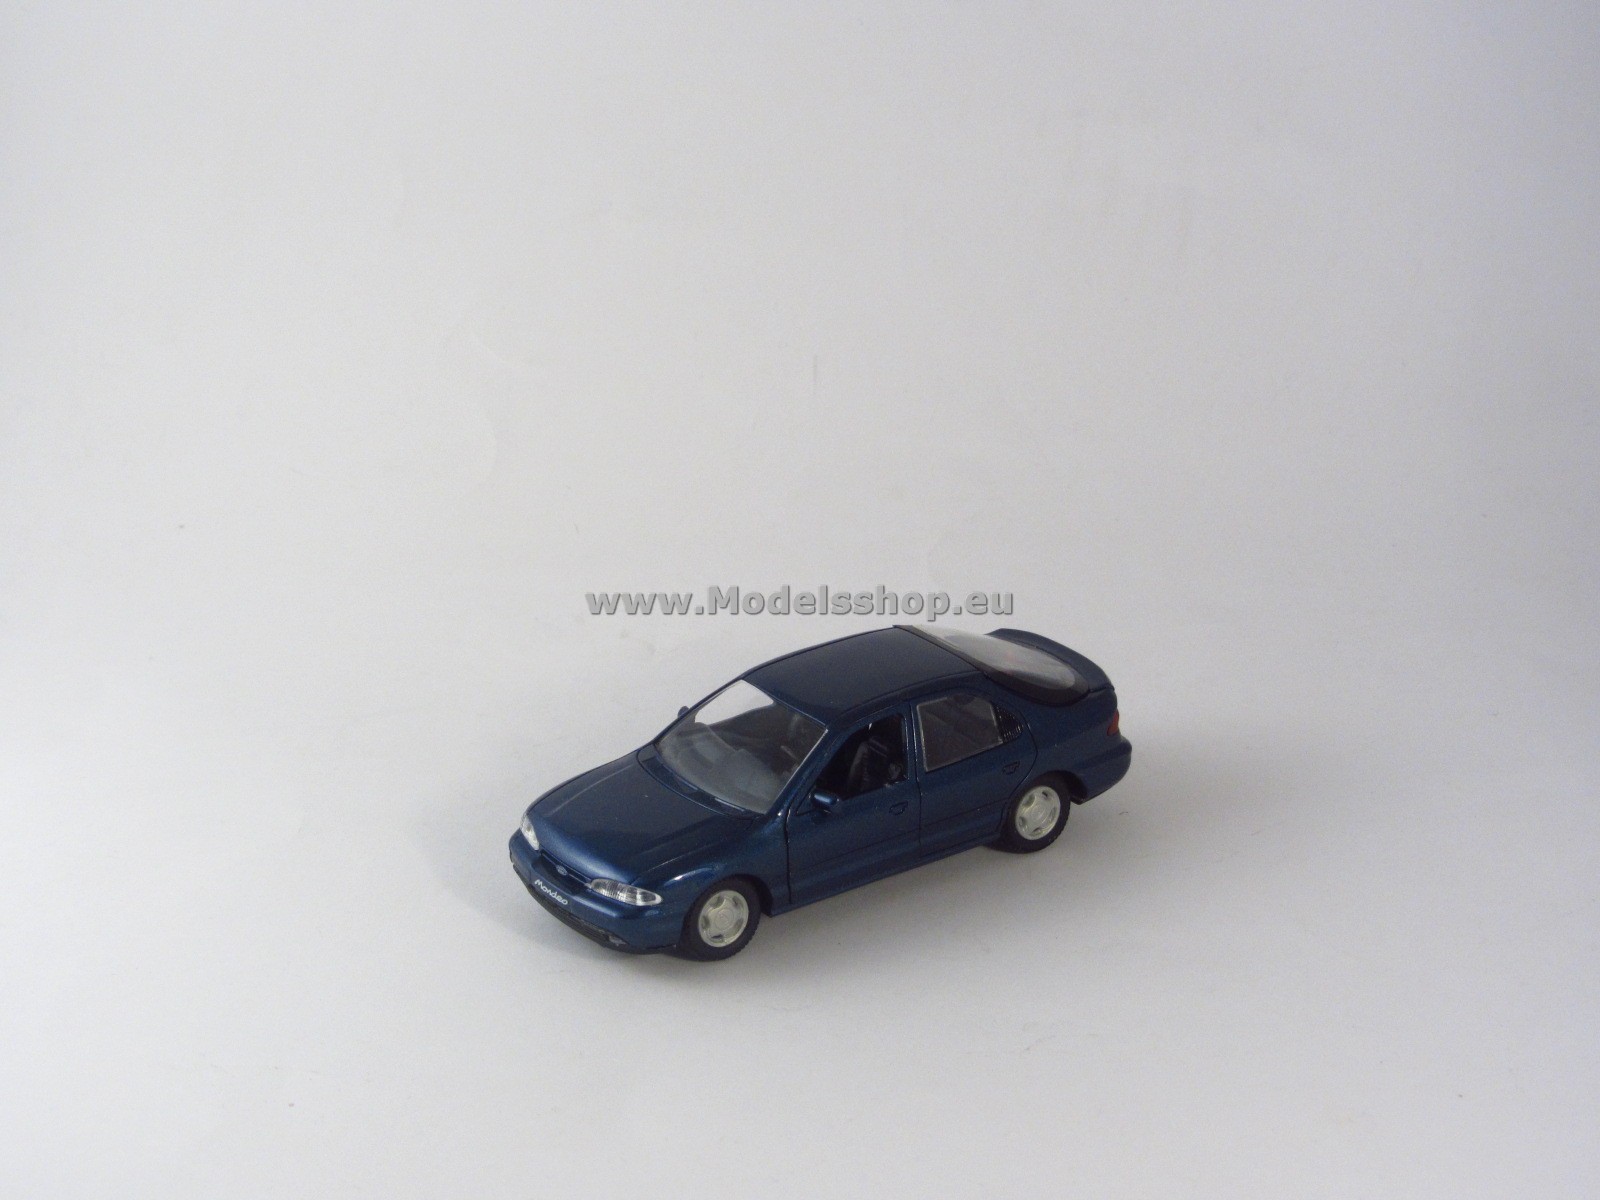 Ford Mondeo HB 1993 /Blue metallic/